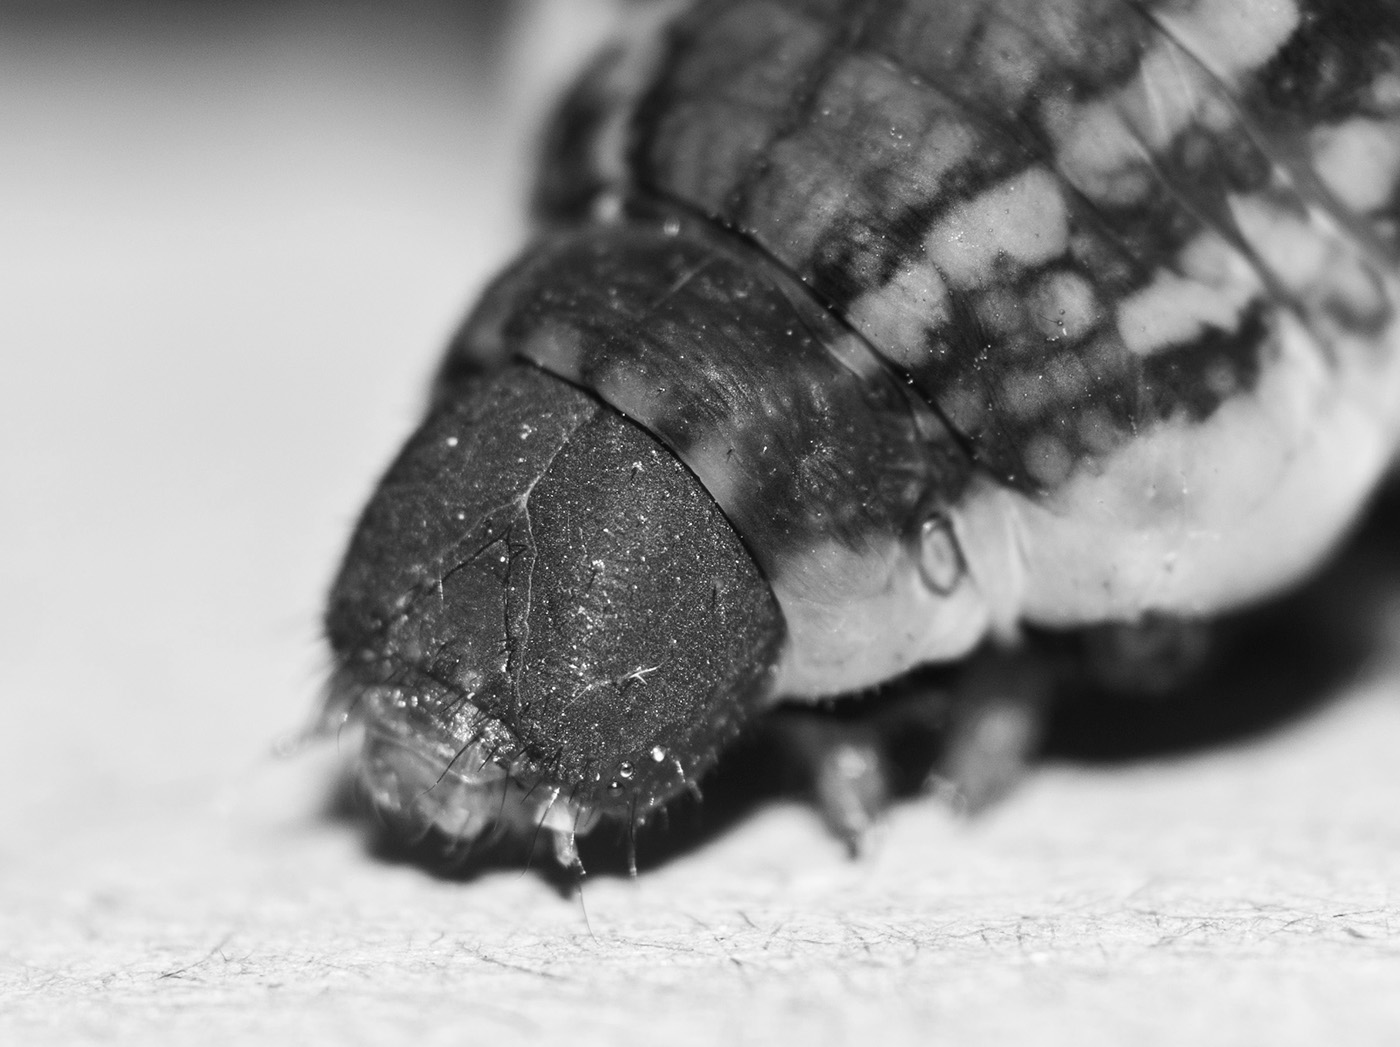 macro close-up Nature forgotten overlooked lost bugs micro Beautiful amazing small Tiny creature